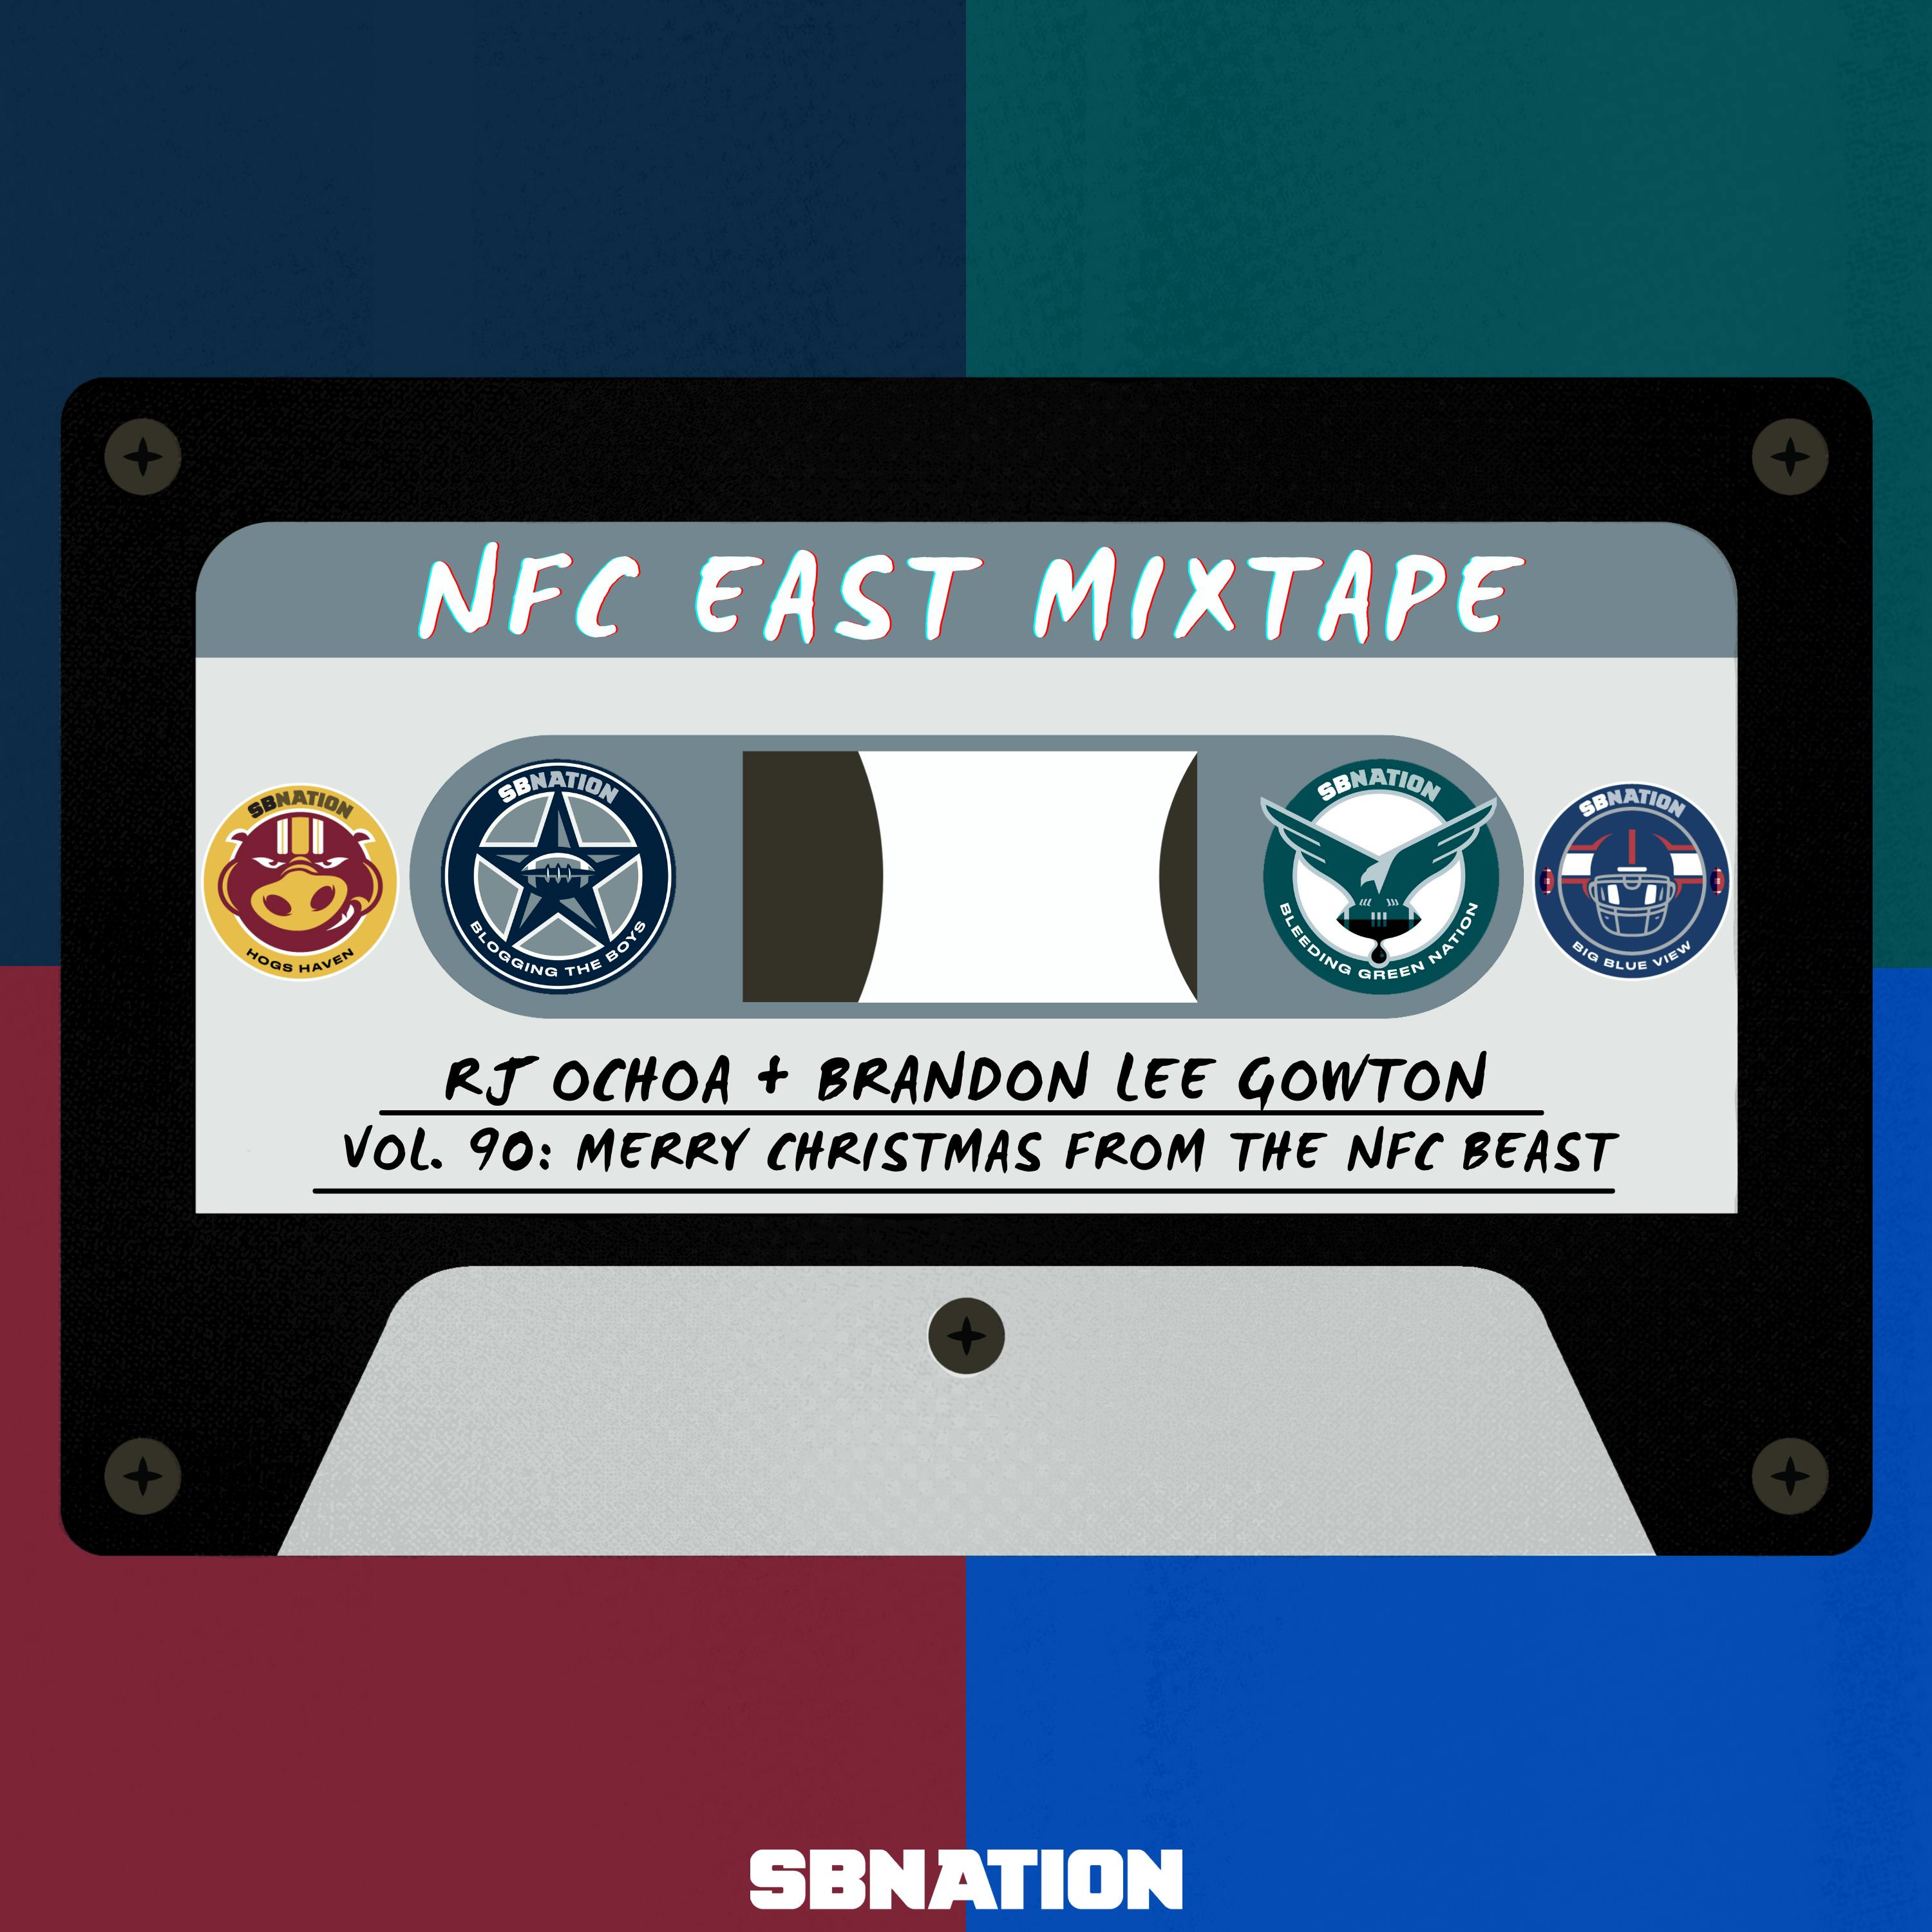 NFC East Mixtape Vol. 90: Merry Christmas from the NFC Beast